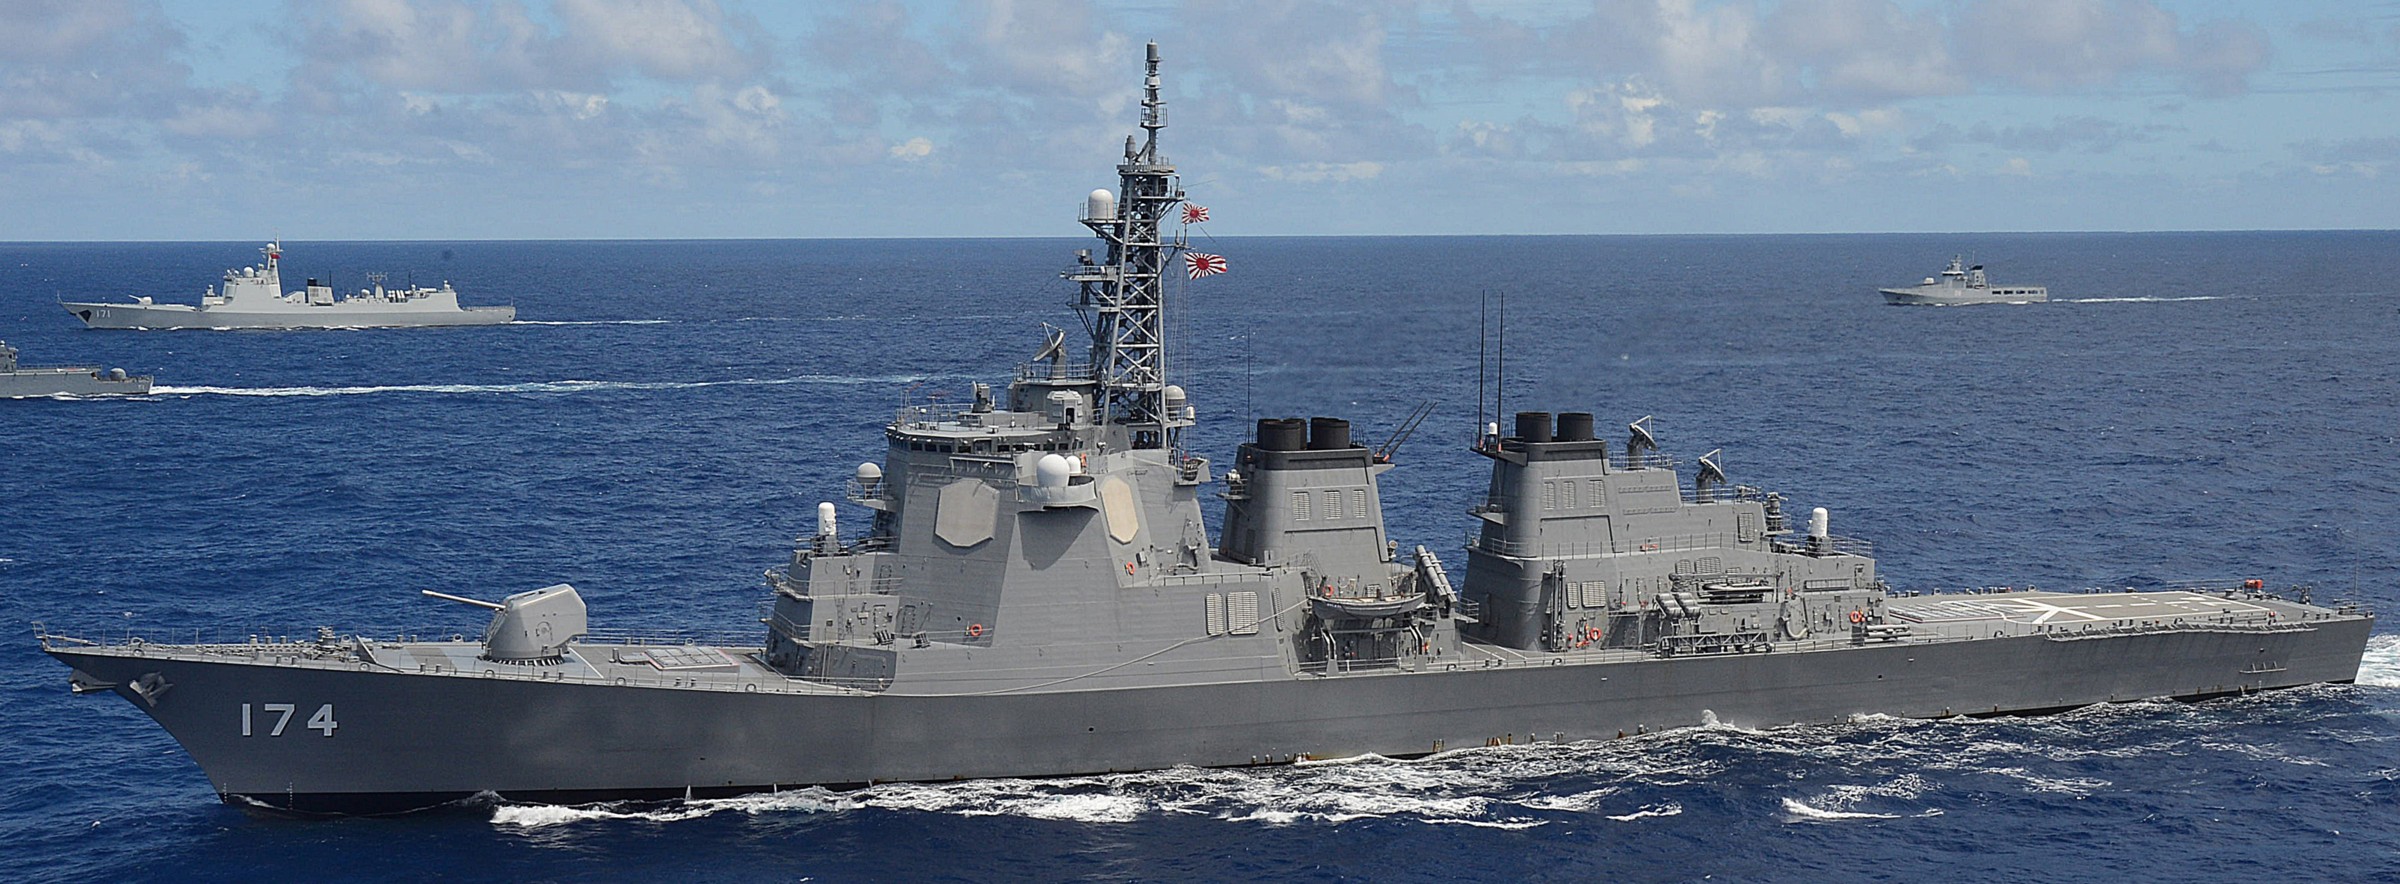 ddg-174 jds kirishima kongou class destroyer japan maritime self defense force jmsdf 36